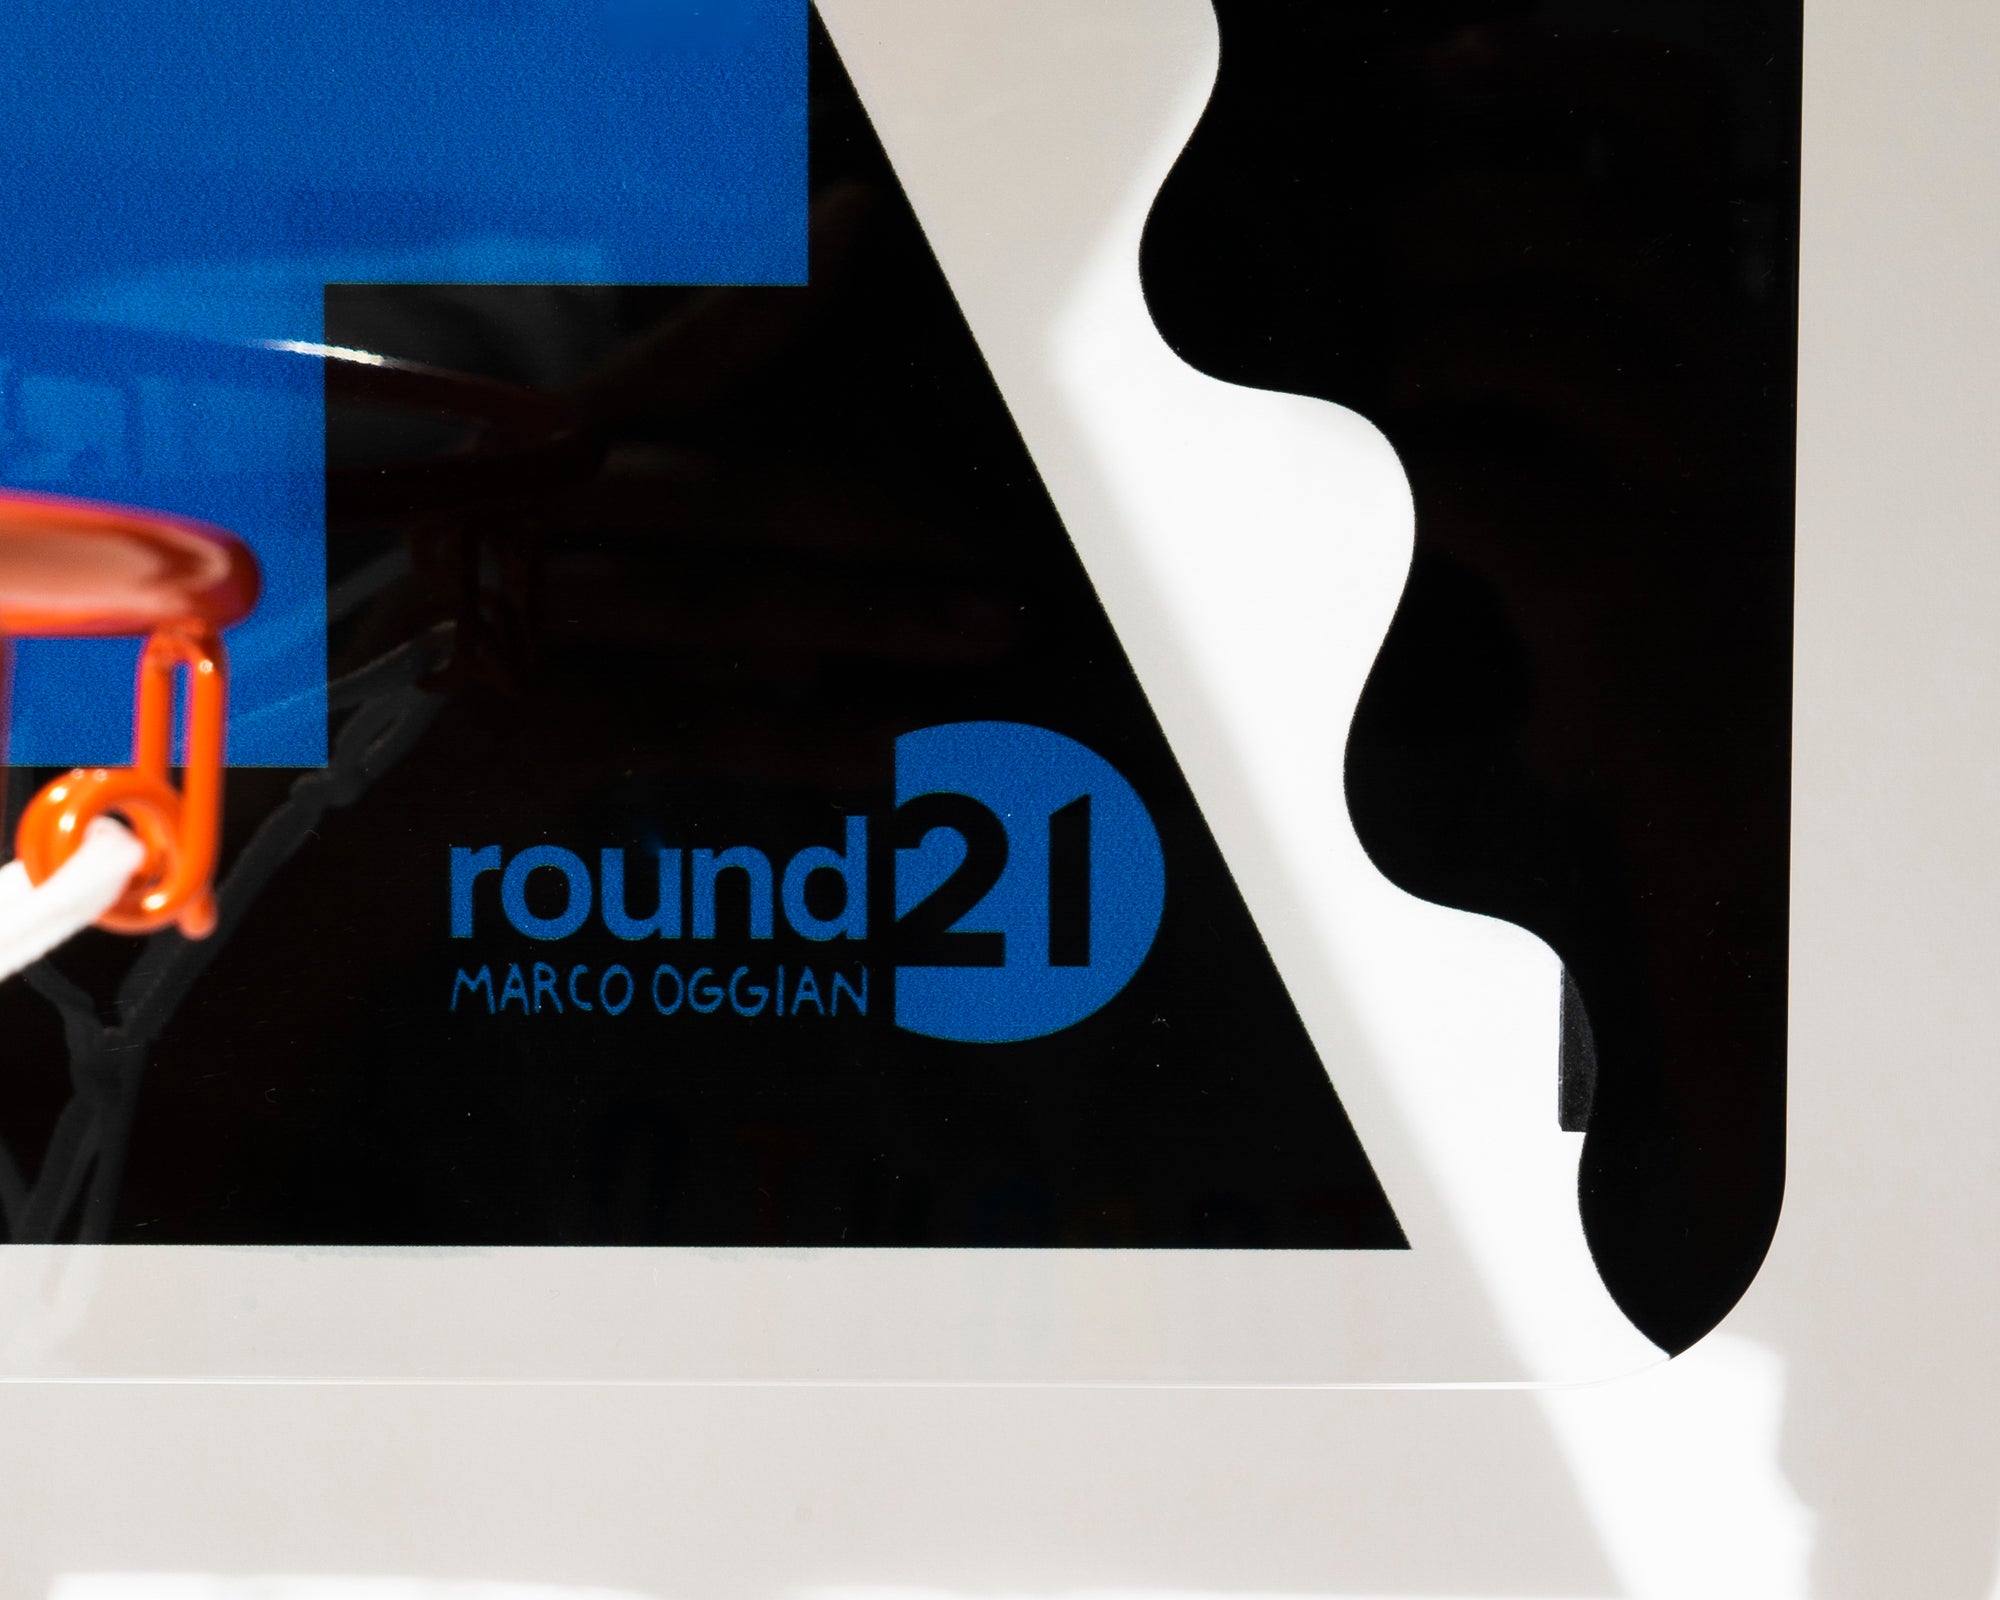 Marco Oggian x round21 mini hoop